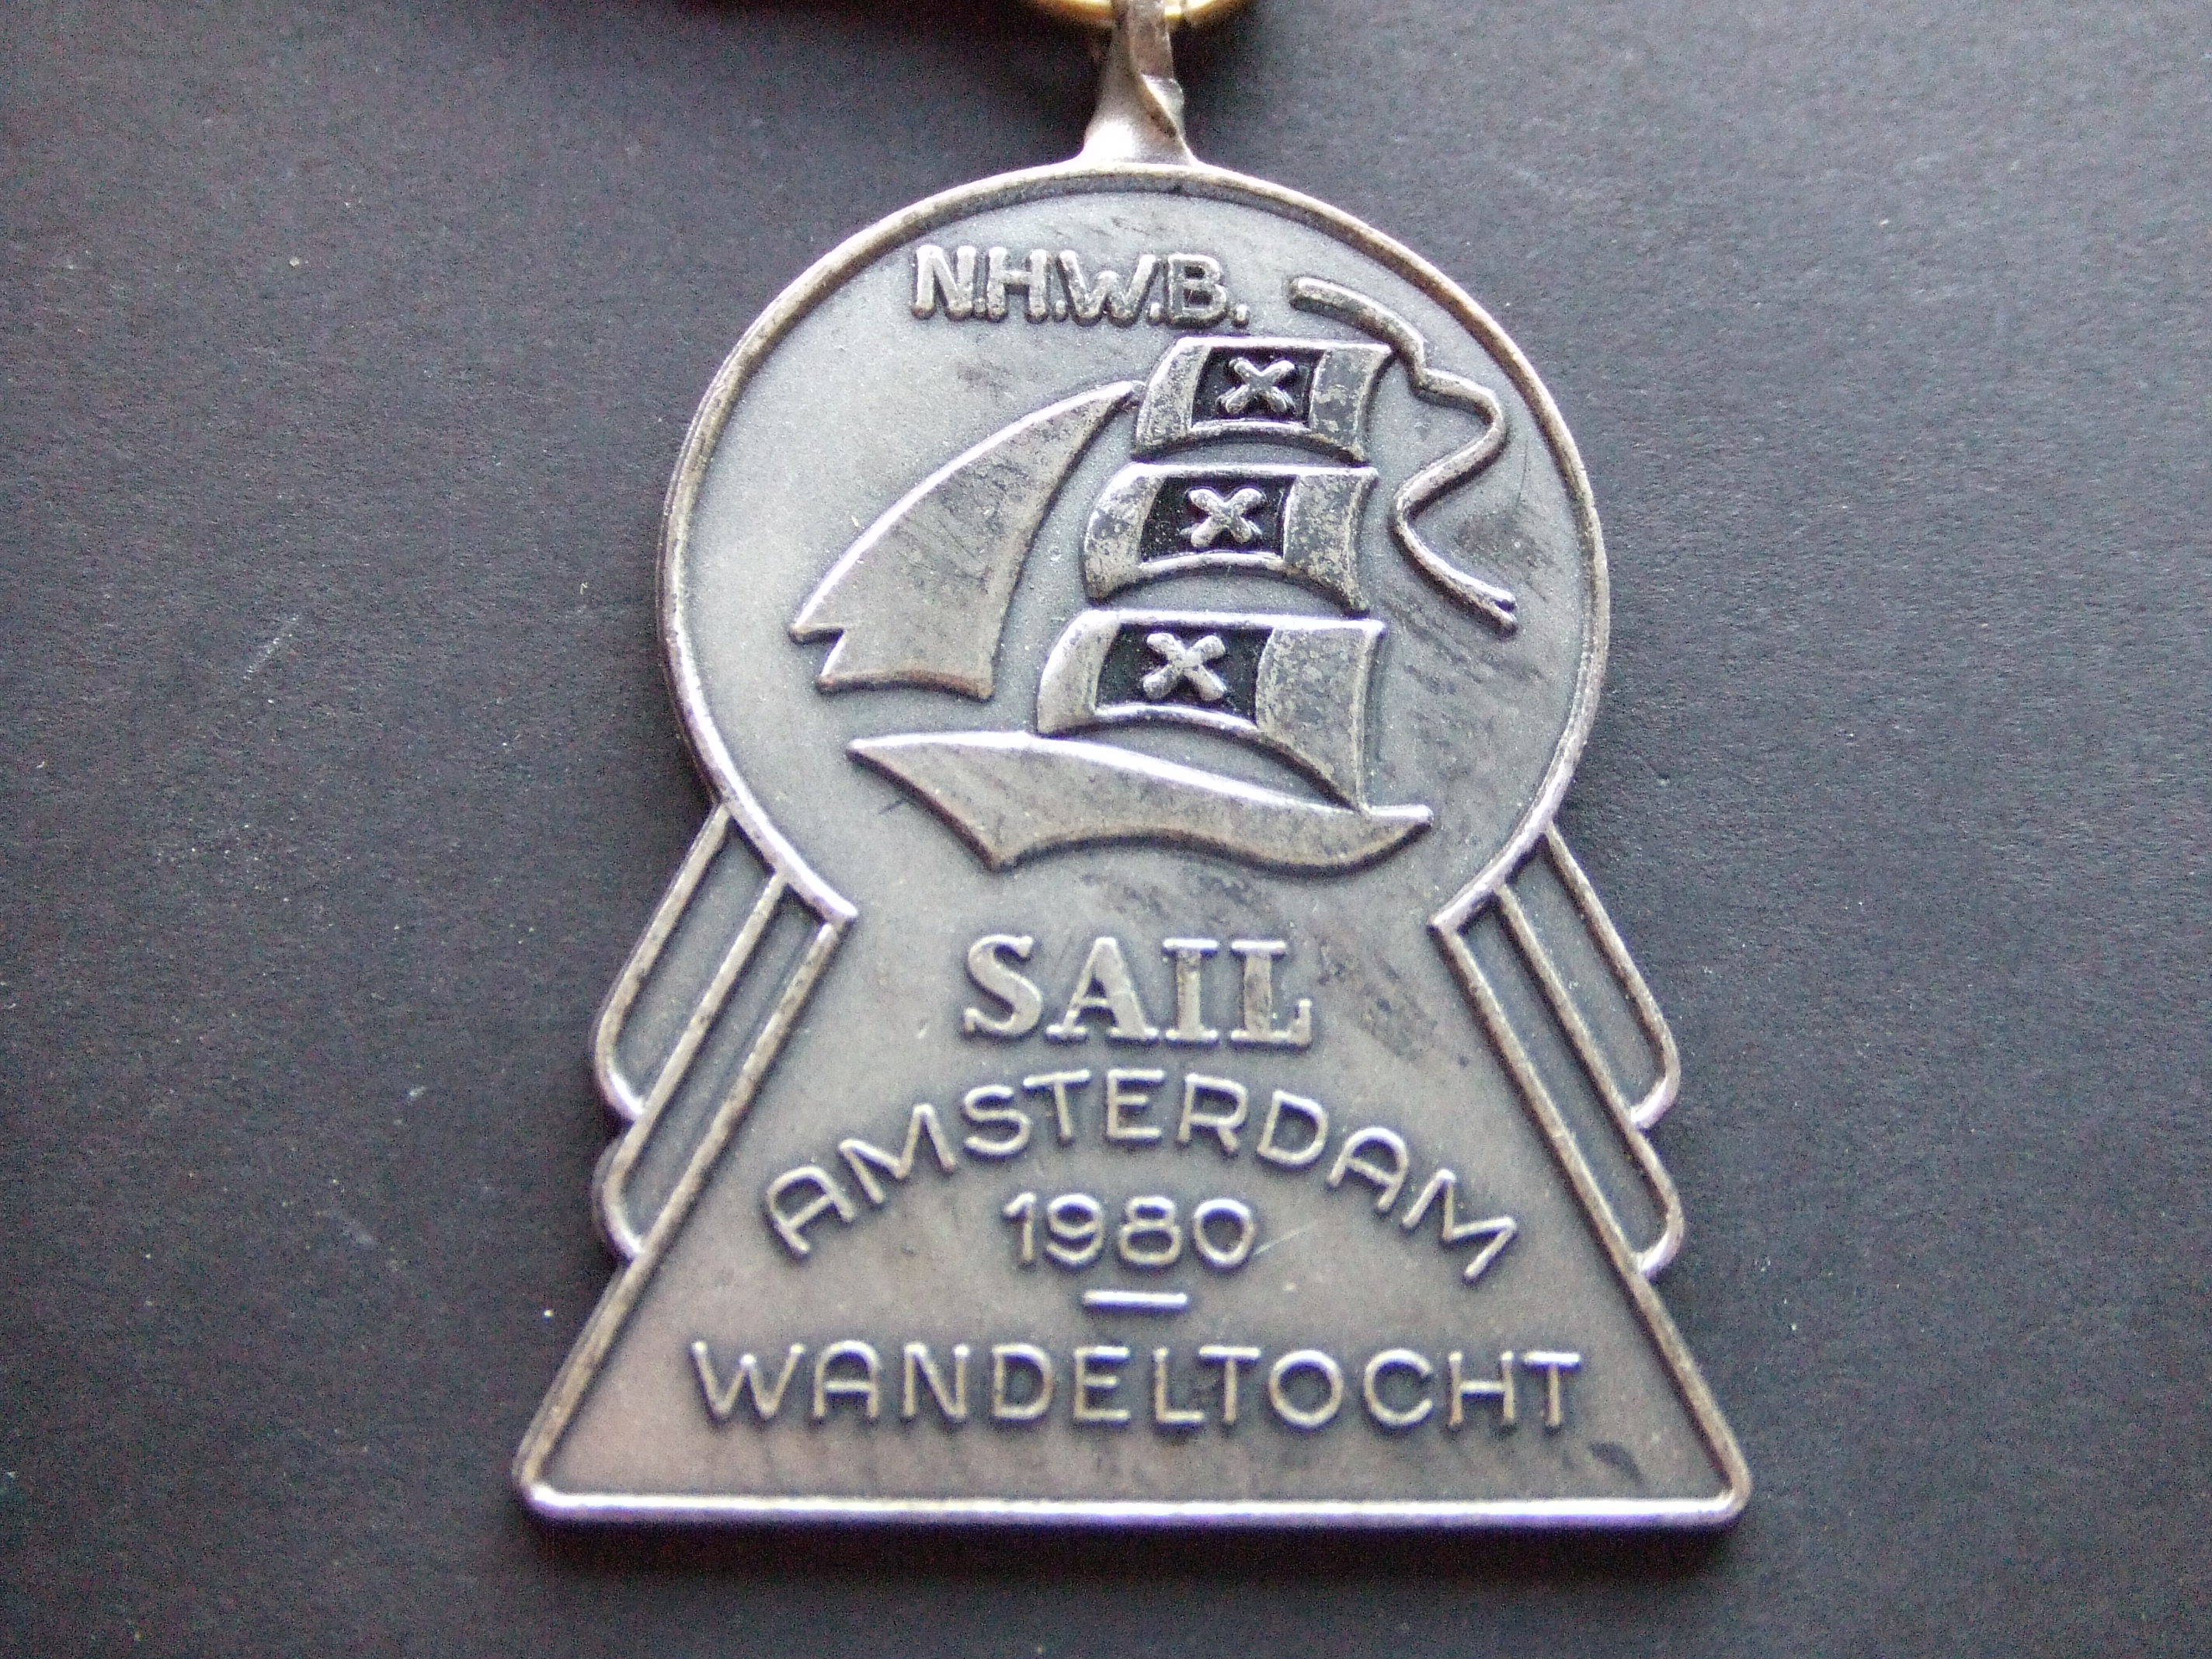 Amsterdam Sail 1980 maritiem evenement zeezeilschepen